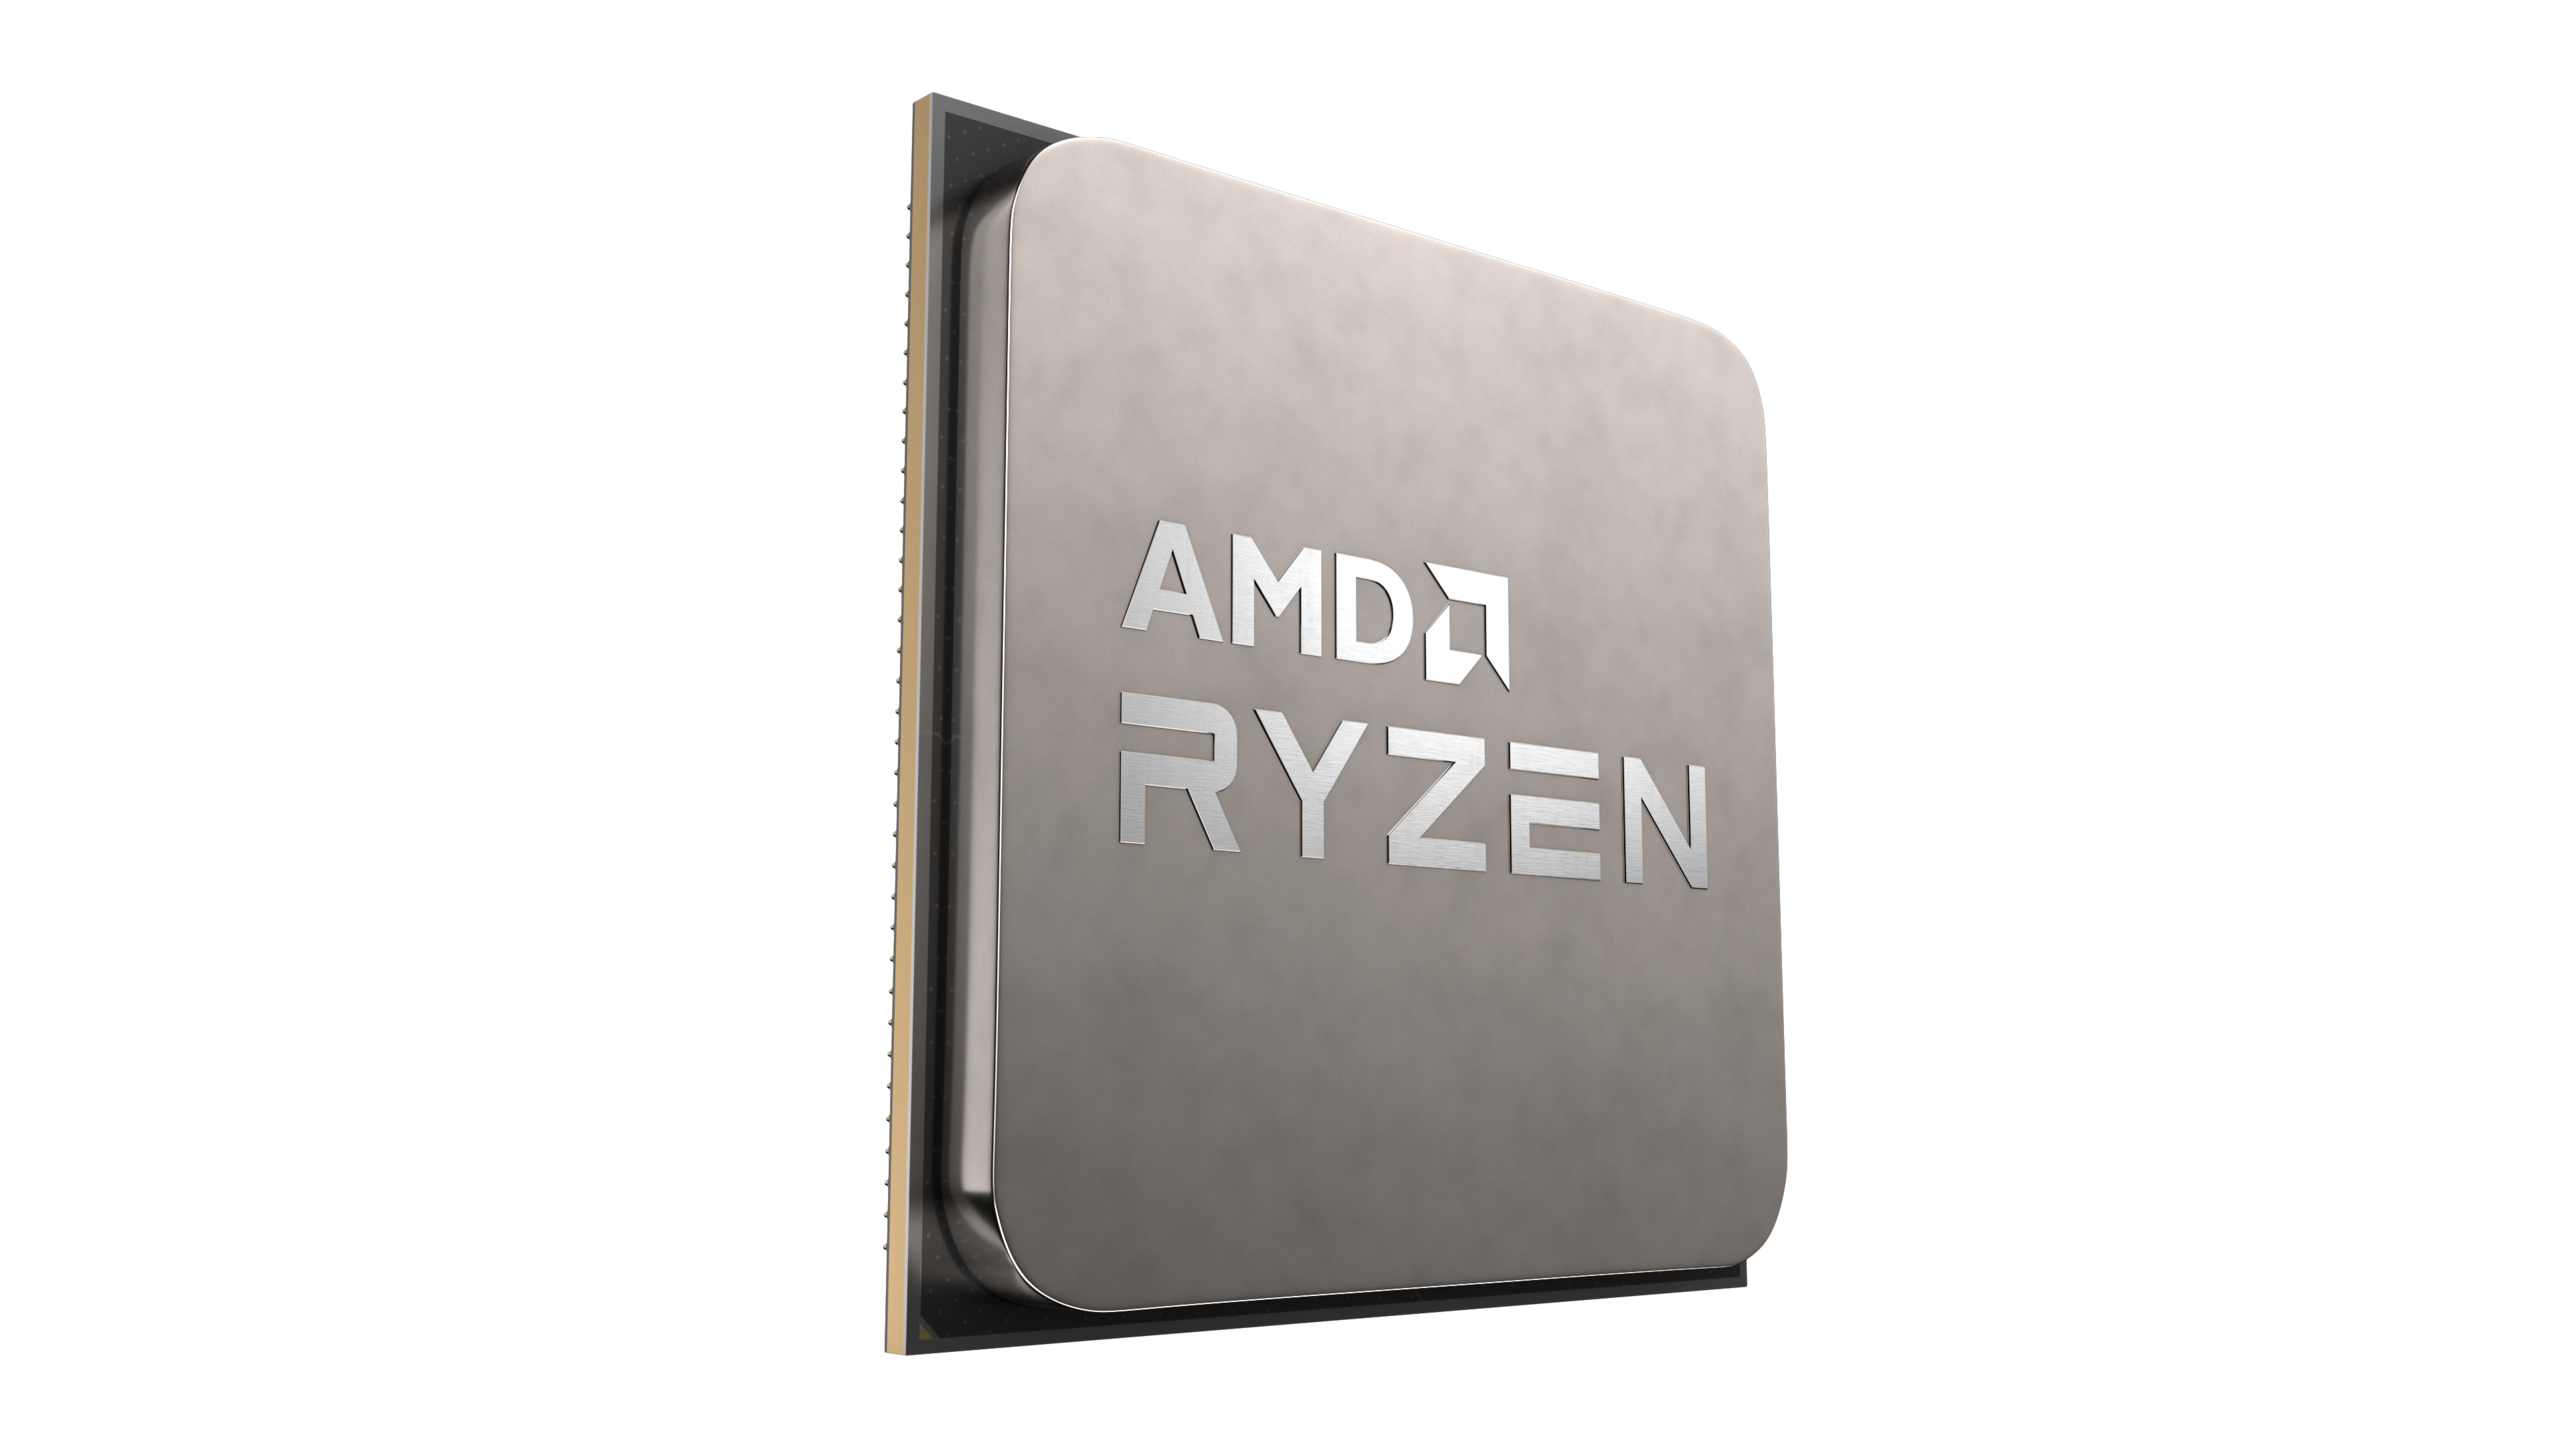 AMD Ryzen 5 5600 Reportedly Launches In 2021 For $220 US, Ryzen 5